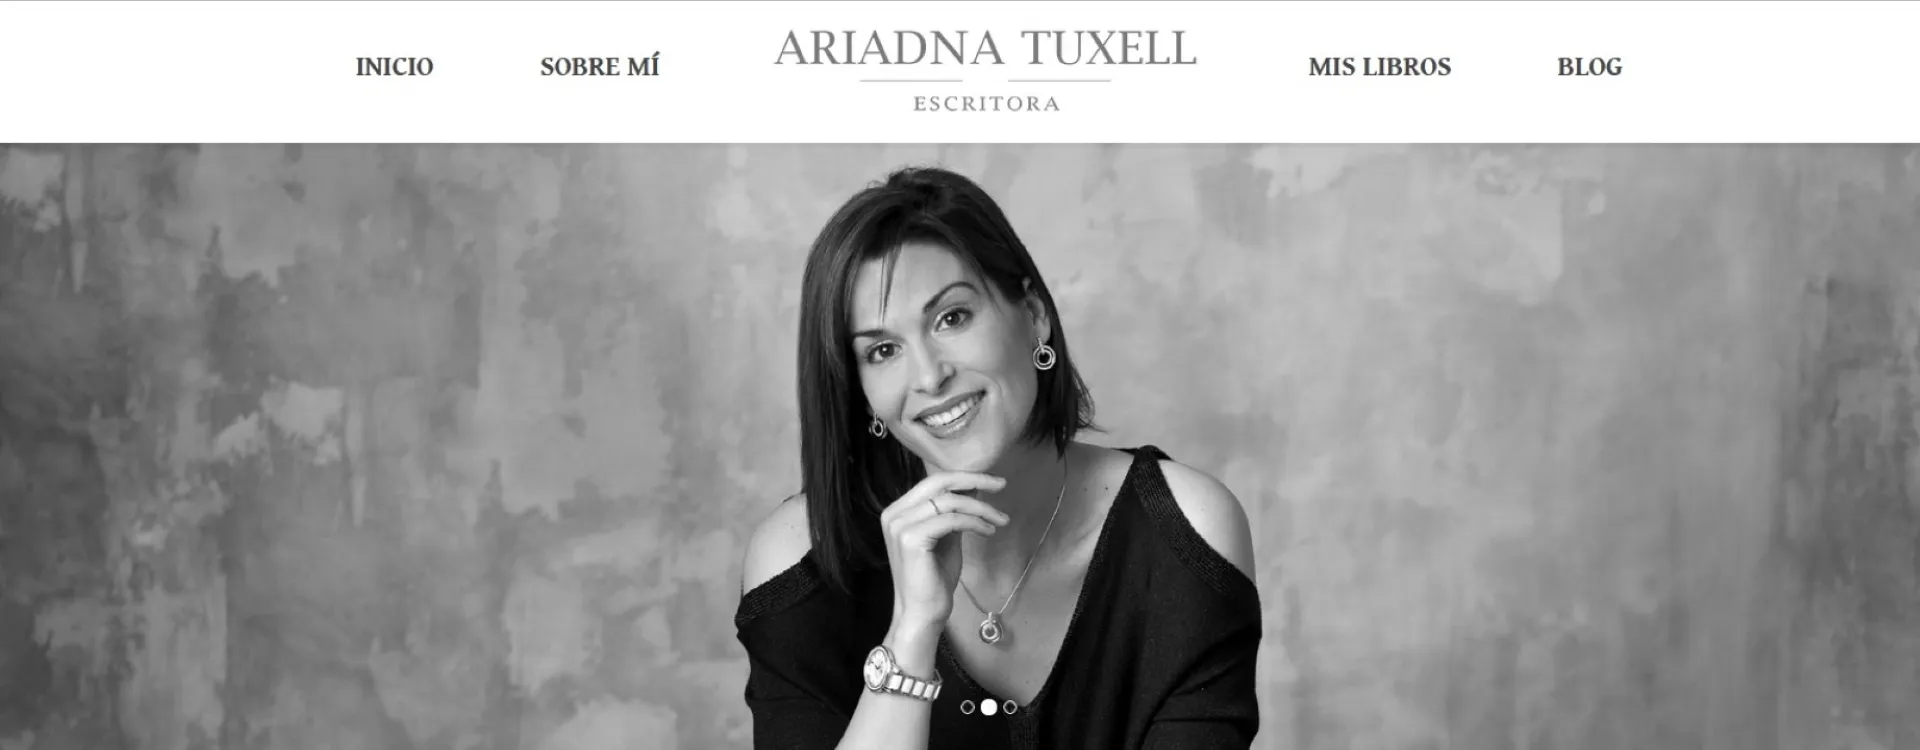 ¿Quién es Ariadna Tuxell?